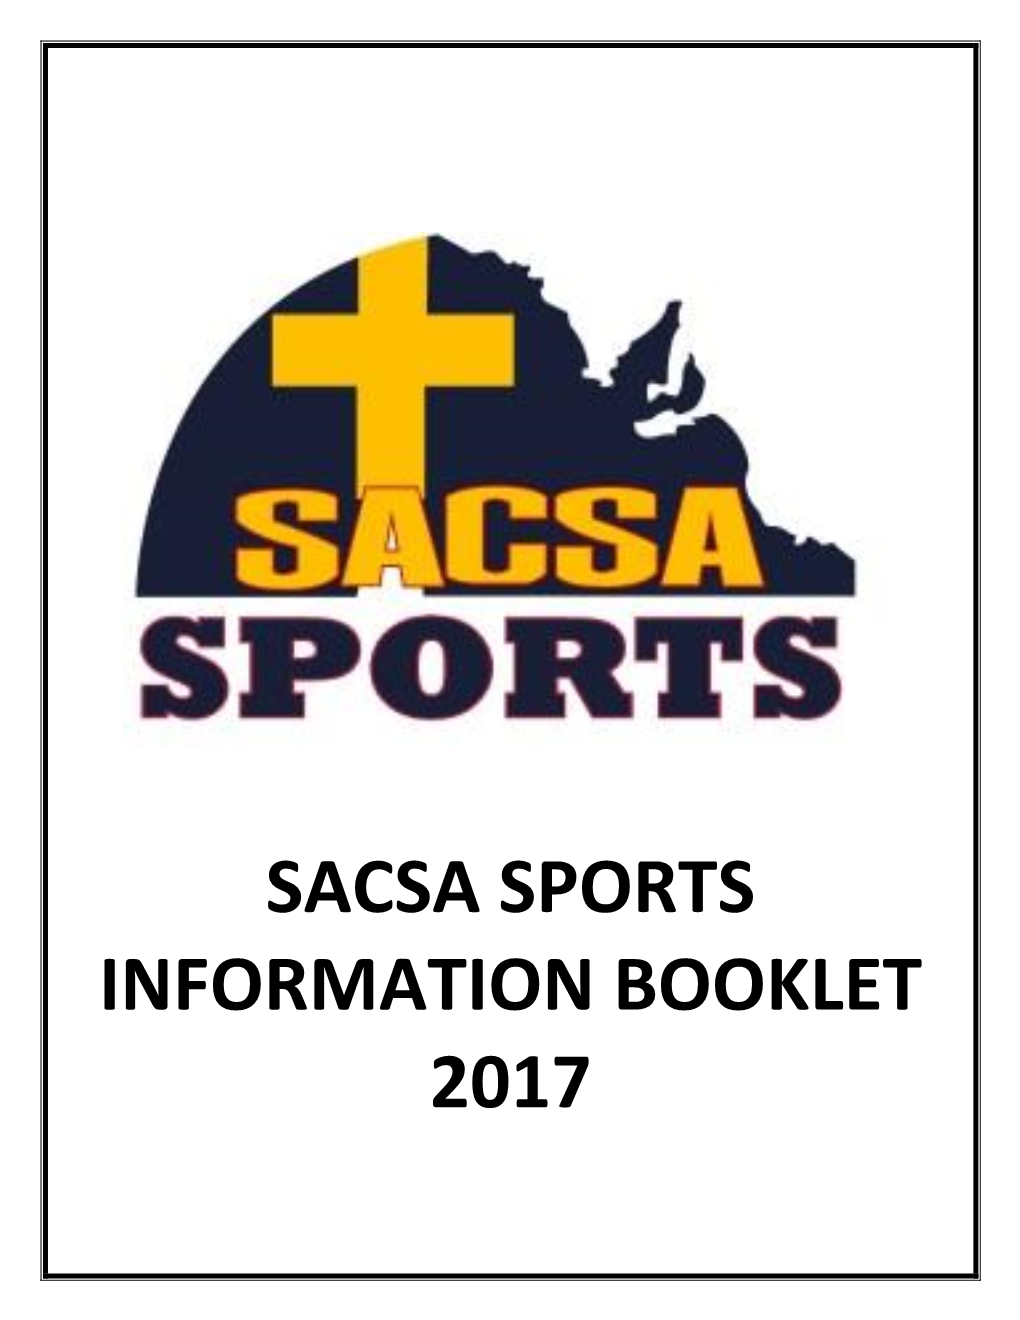 Sacsa Sports Information Booklet 2017